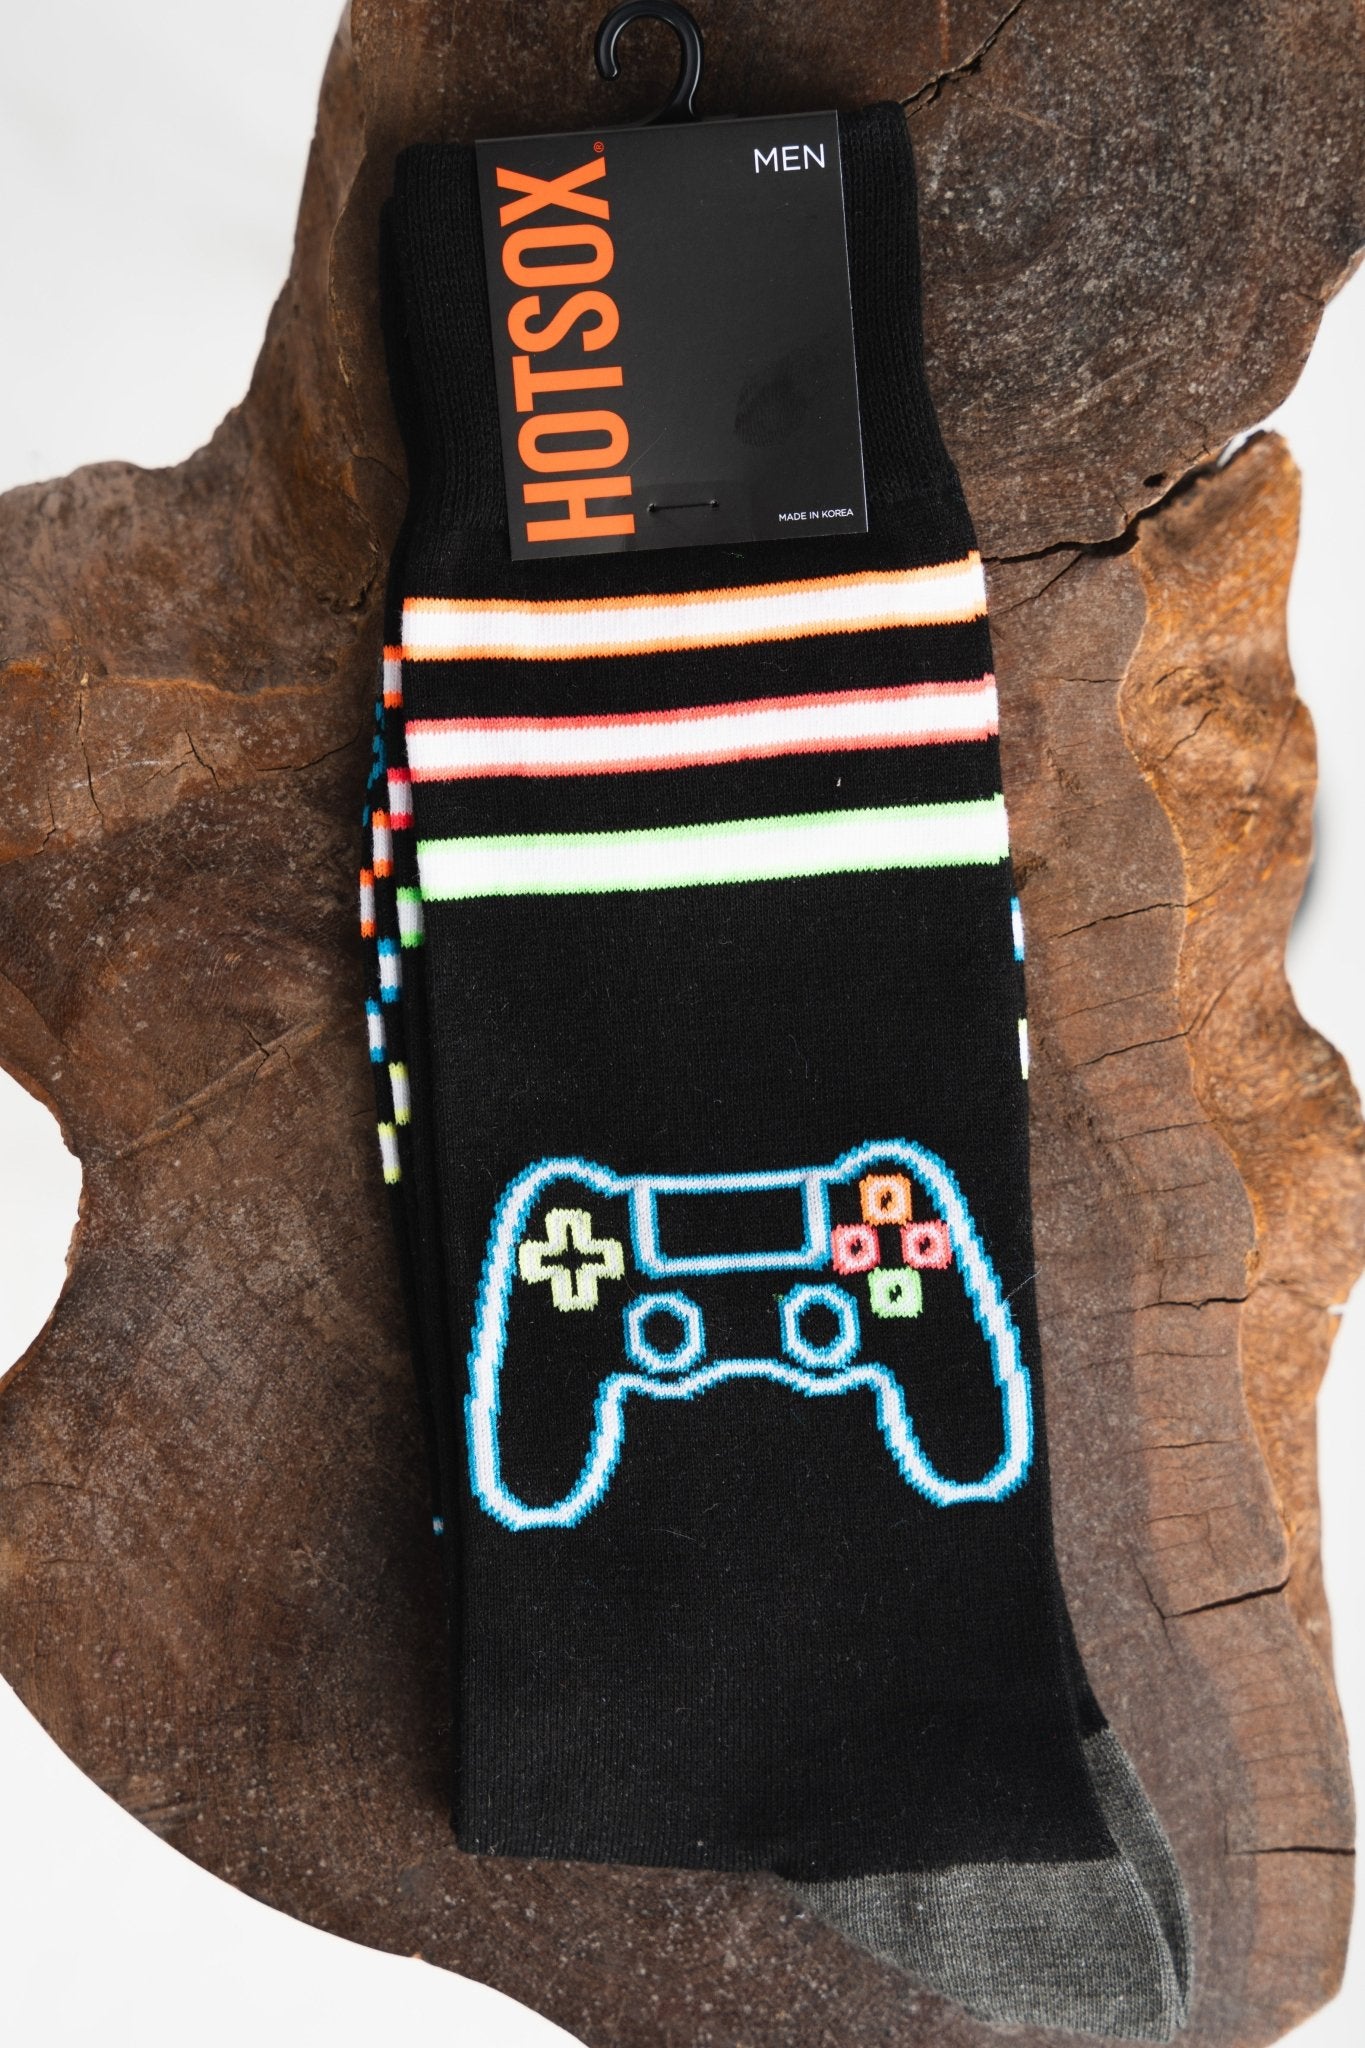 HotSox gamer controller men's socks - Trendy Socks at Lush Fashion Lounge Boutique in Oklahoma City